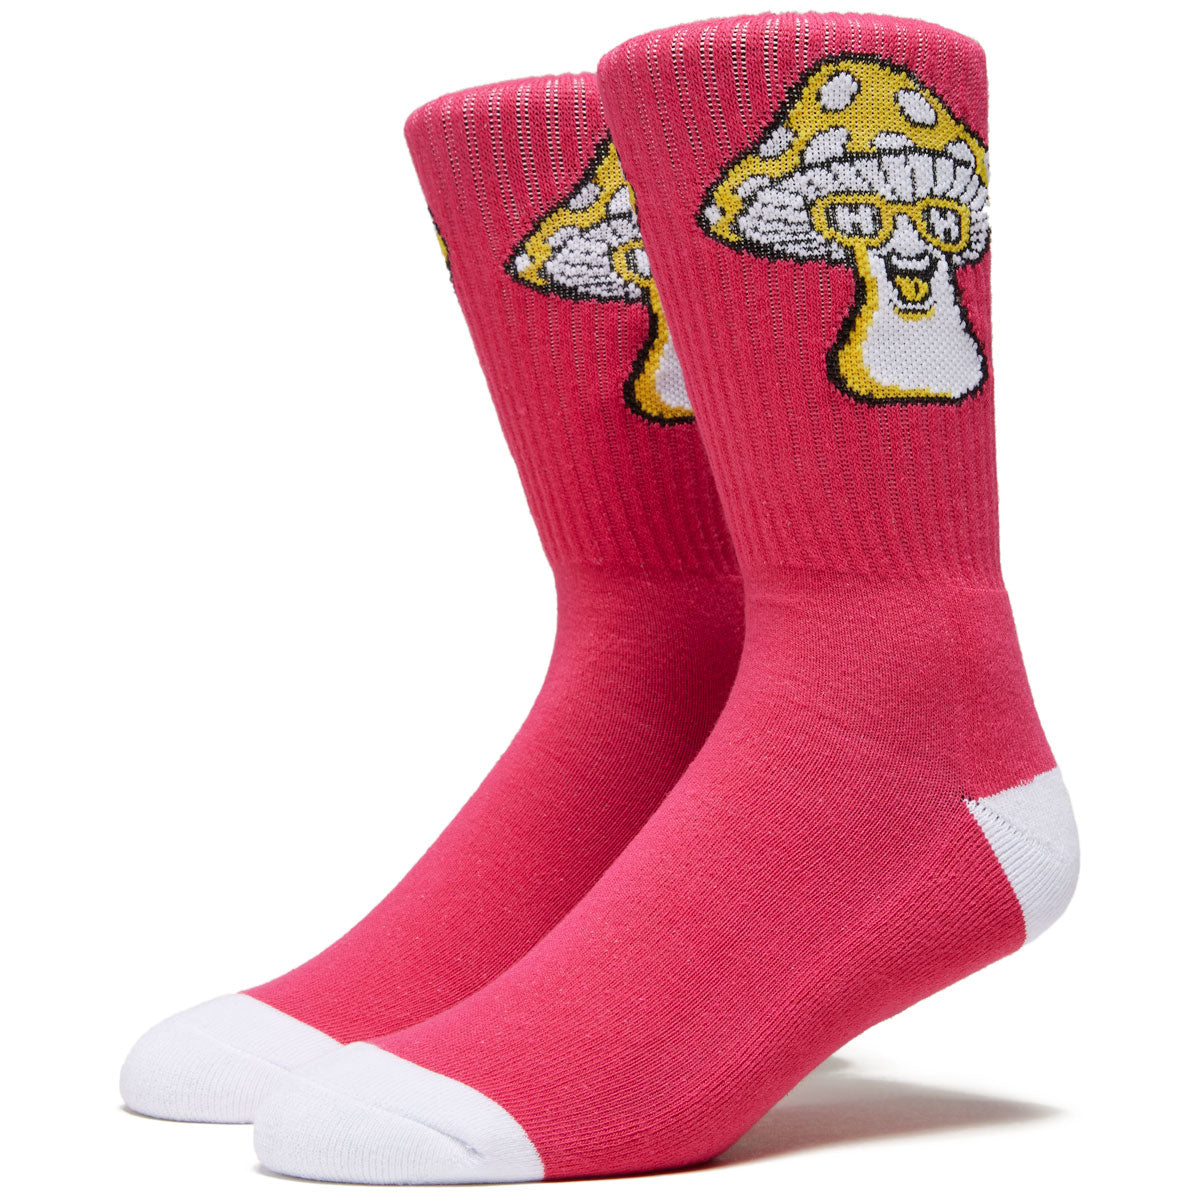 Happy Hour Mushroom Socks - Hot Pink image 1